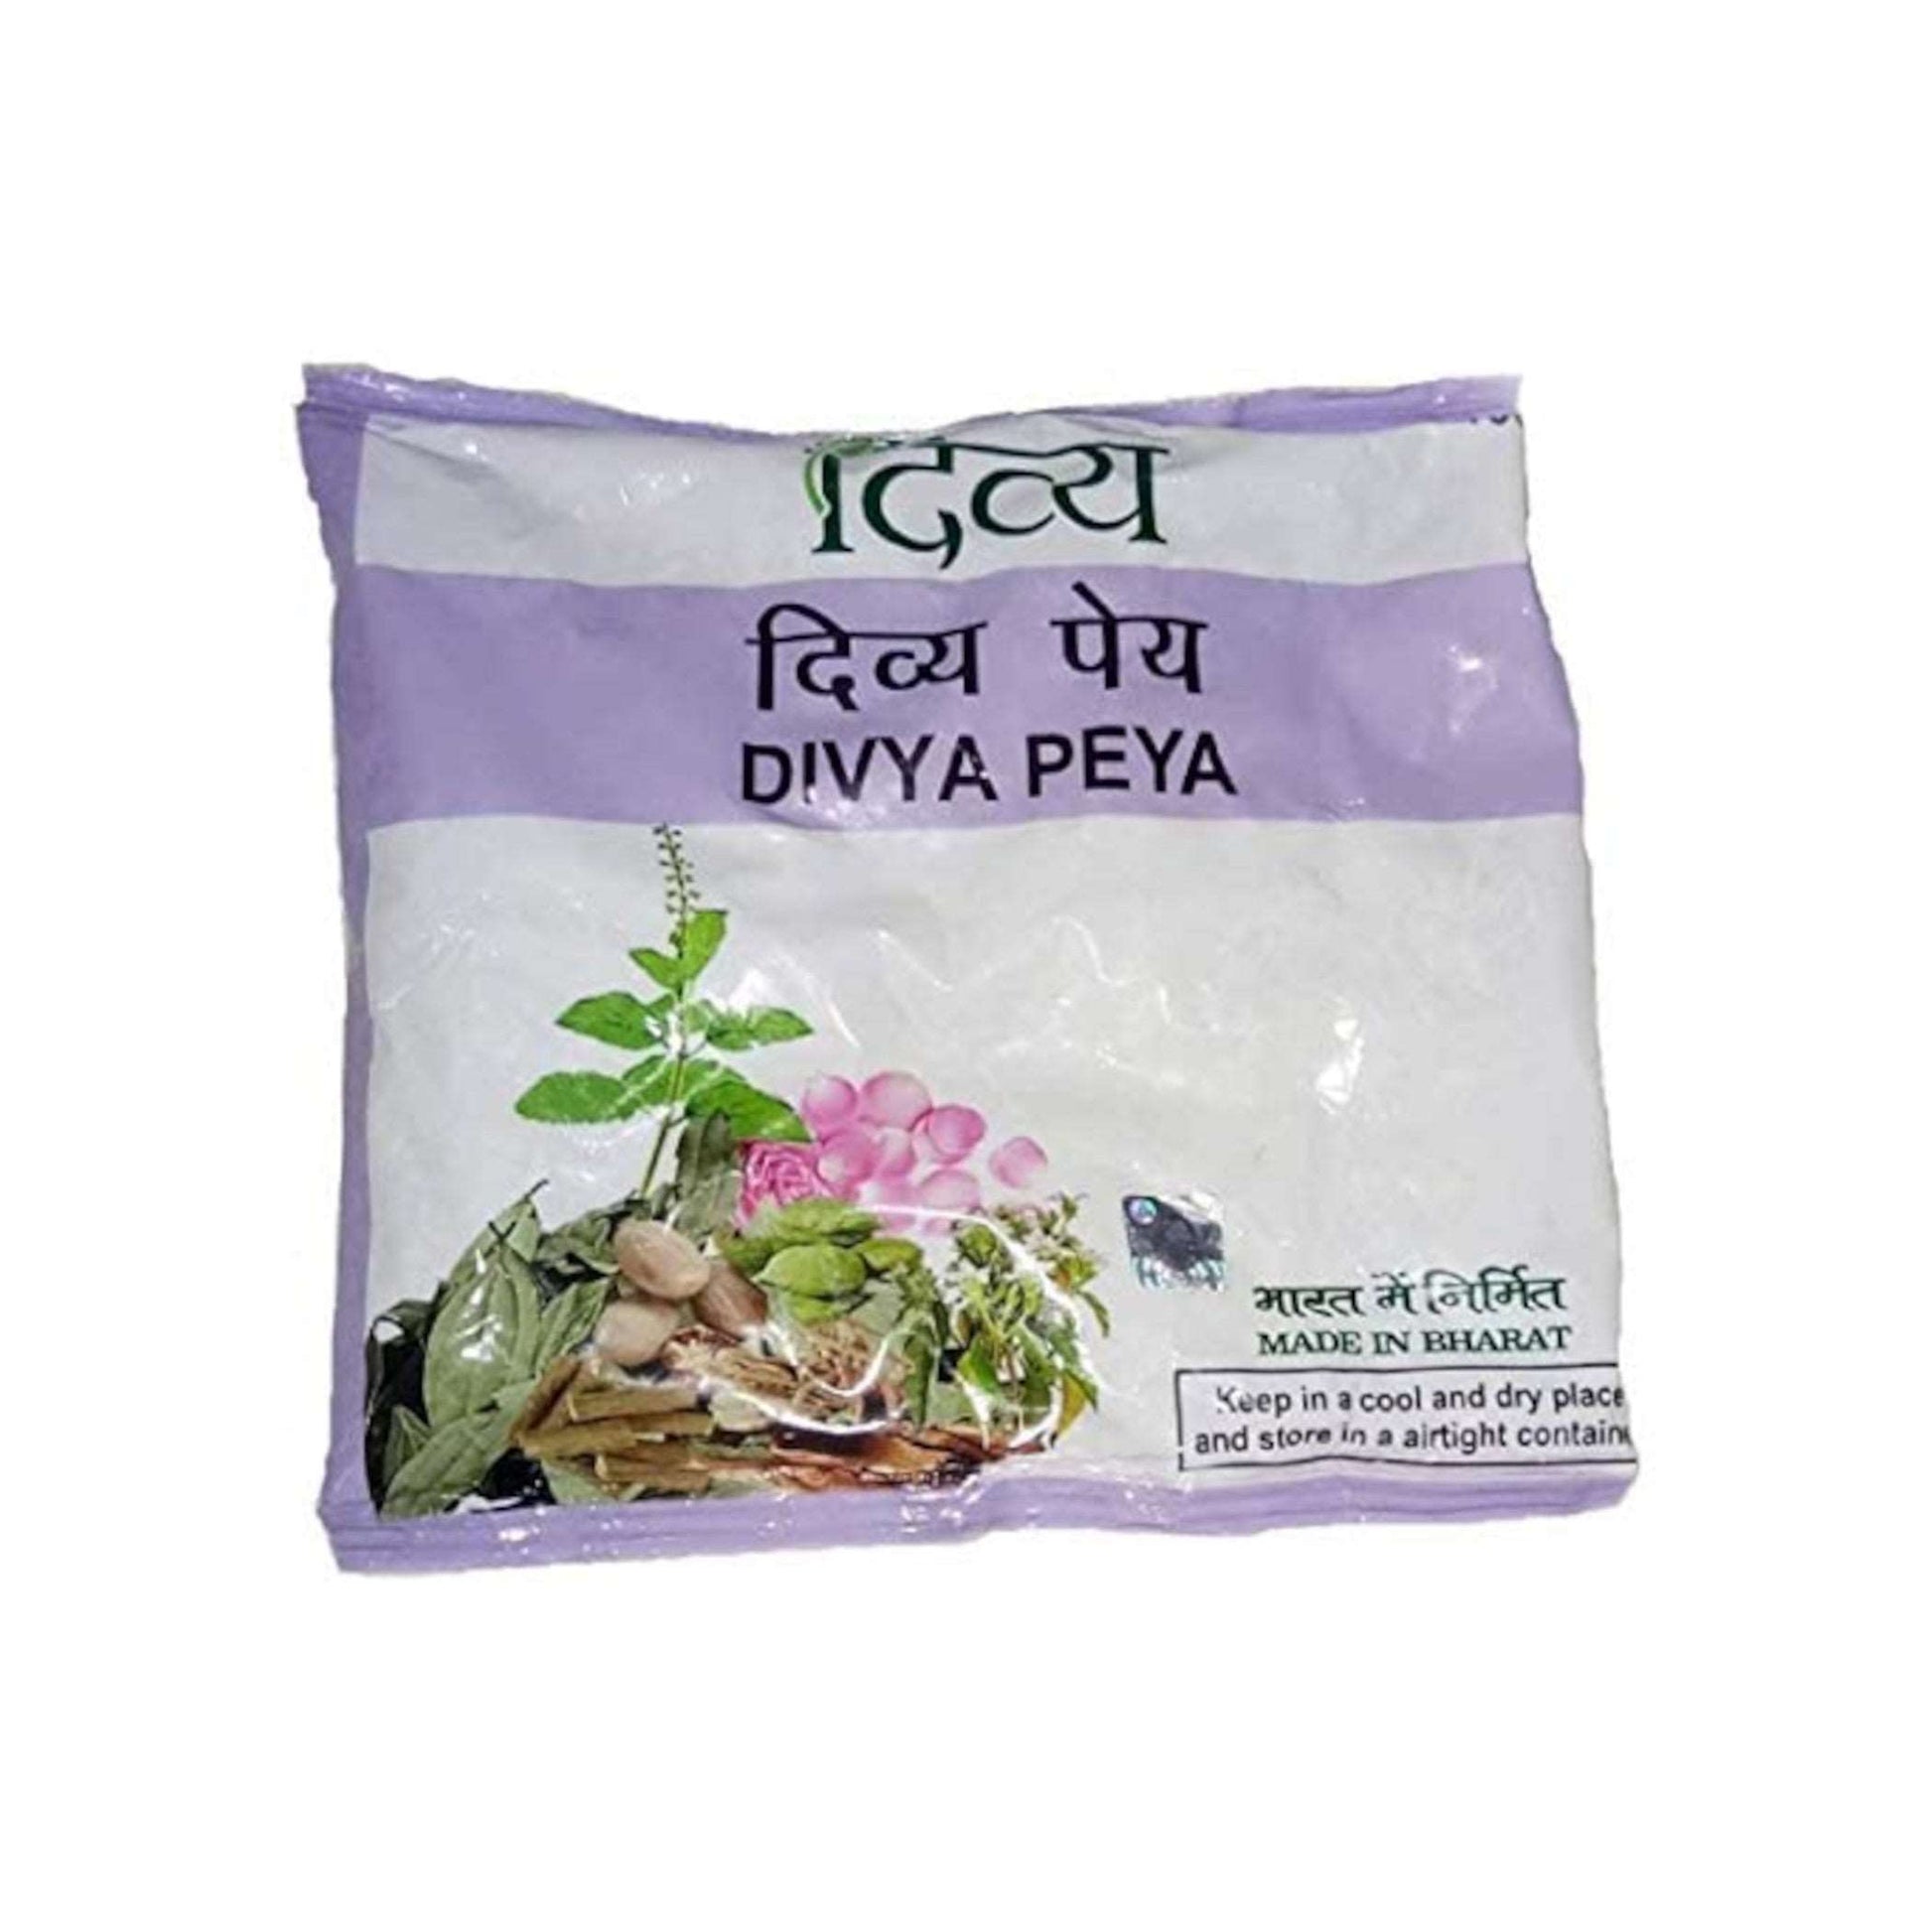 Image for Divya Patanjali Peya Herbal Tea - 100g. Ayurvedic herbal tea for weight loss, metabolism, and overall health, free of caffeine.